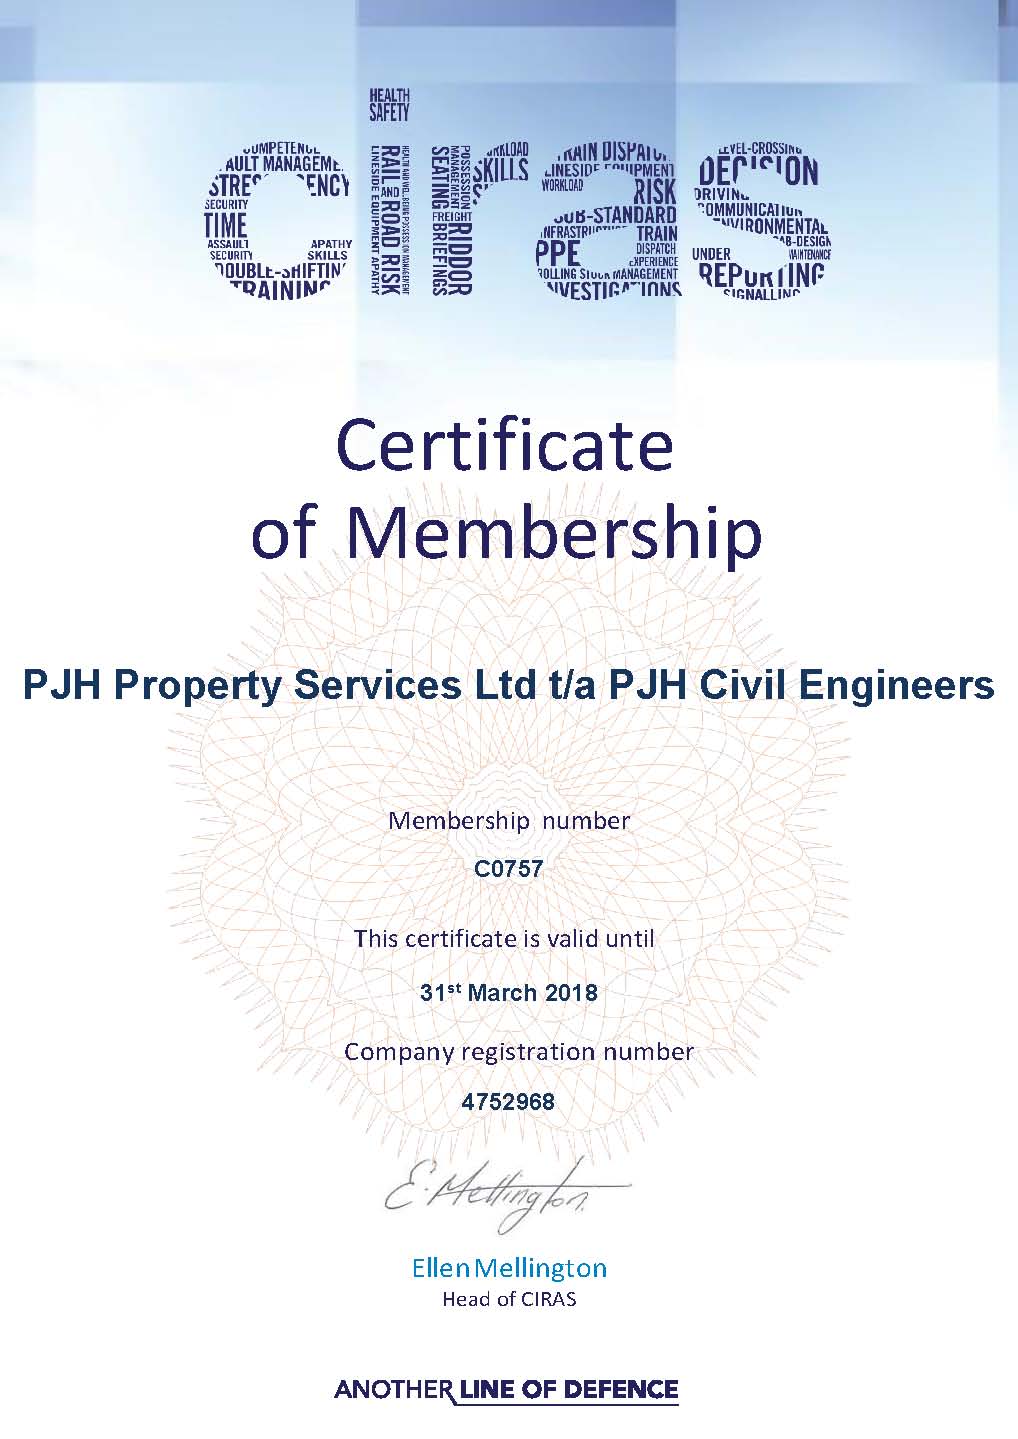 PJH Property Services Ltd t.a PJH Civil Engineers - C0757 2017-2018